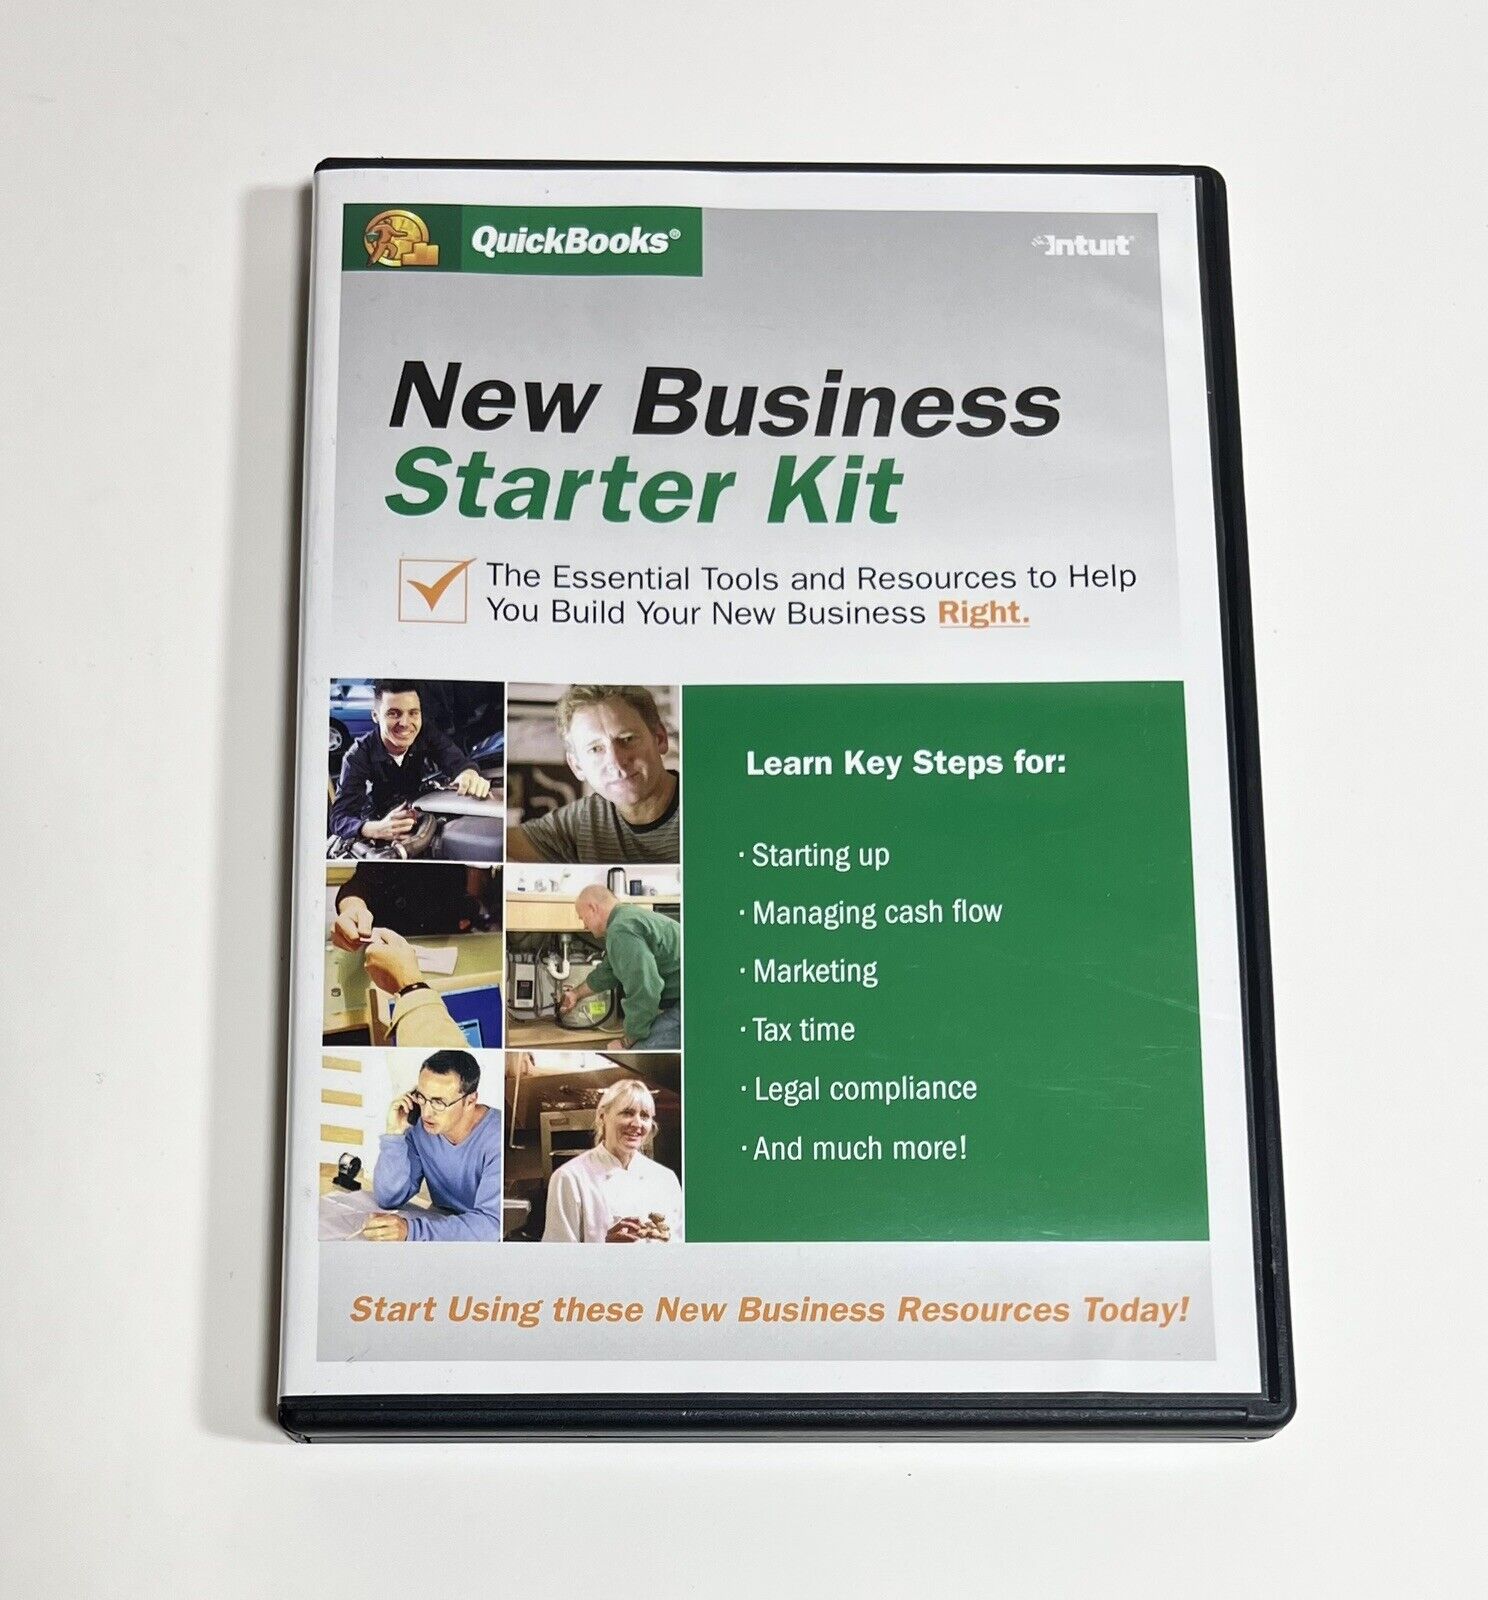 Intuit - Quickbooks - New Business Starter Kit Software - Tutorial